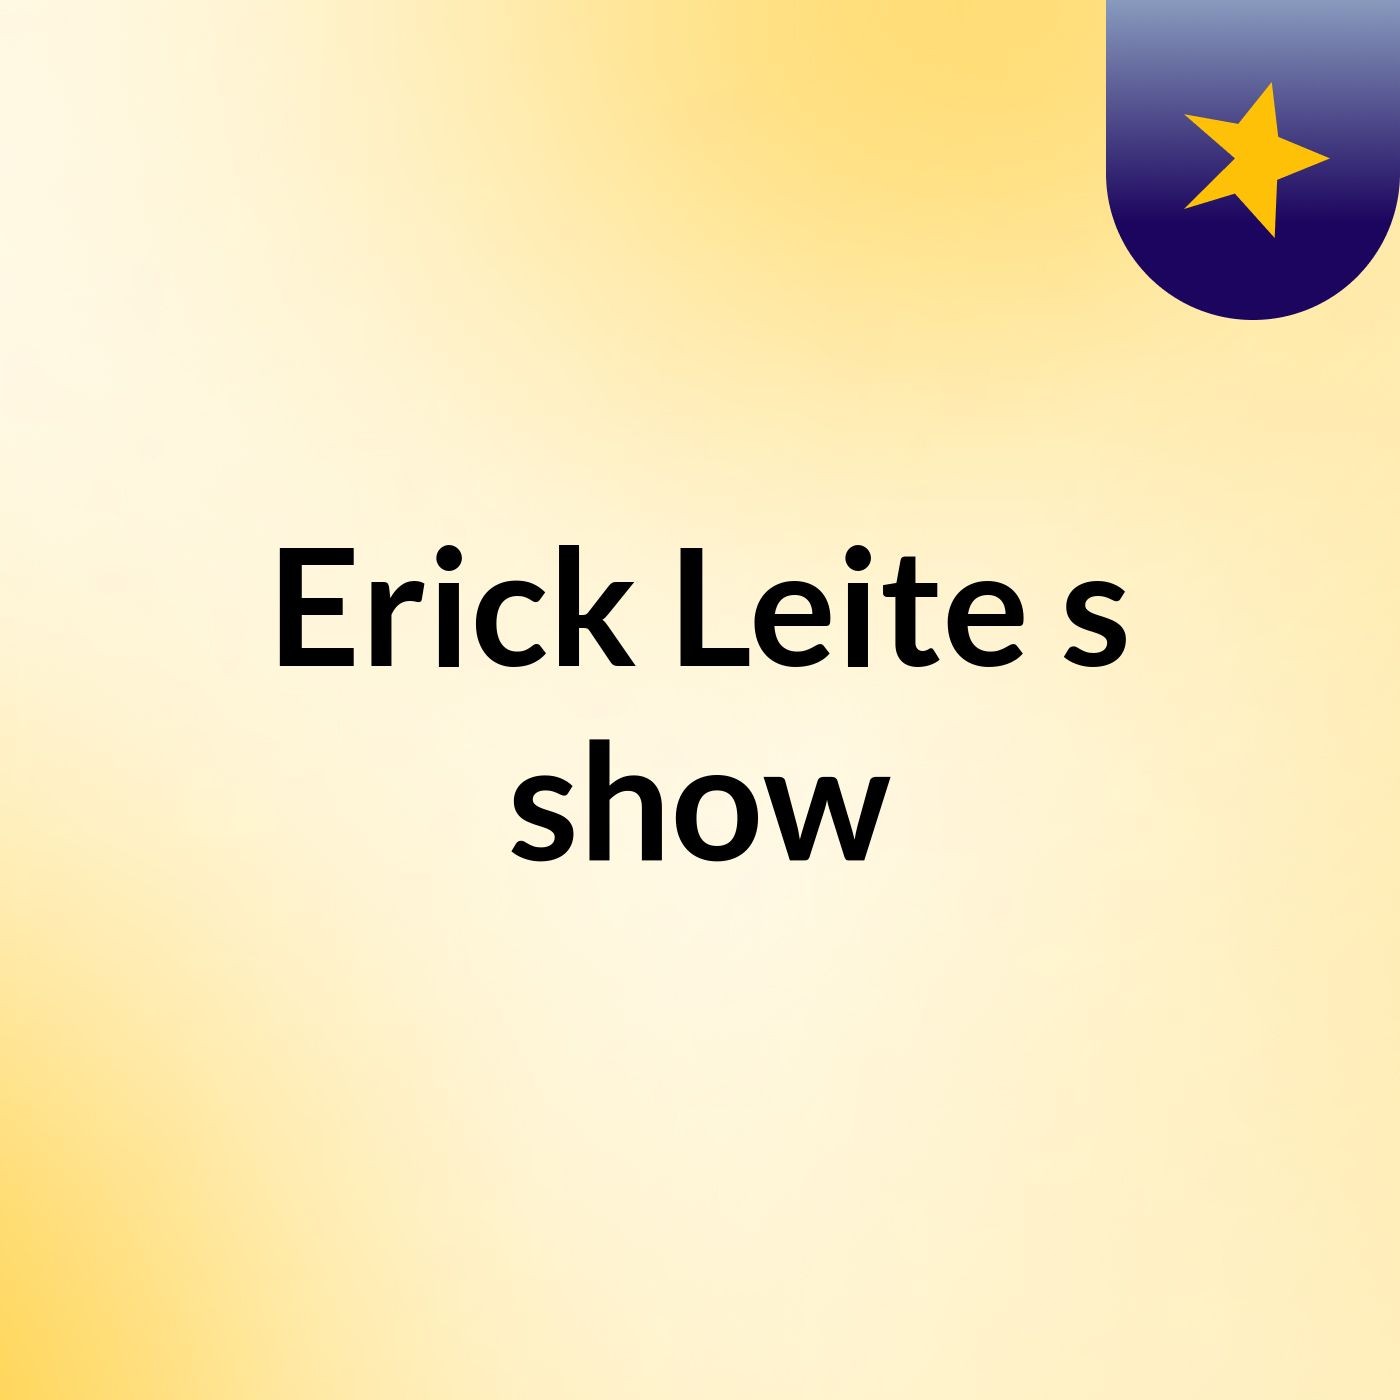 Erick Leite's show